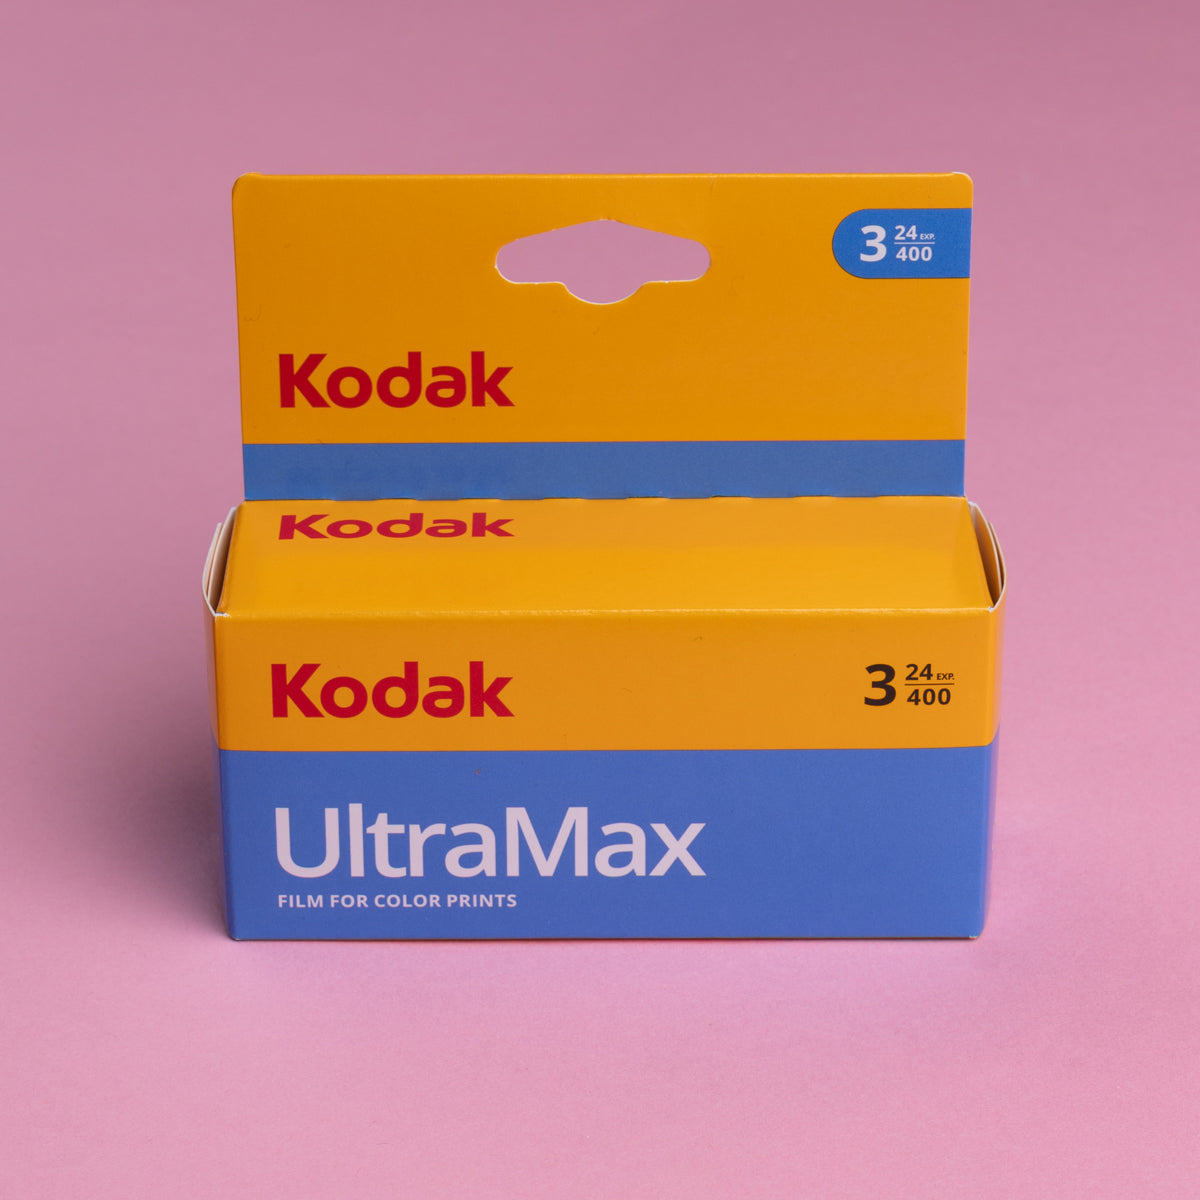 Kodak Ultramax 400 35mm (1 x Pack of 3 24exp, 3 rolls)